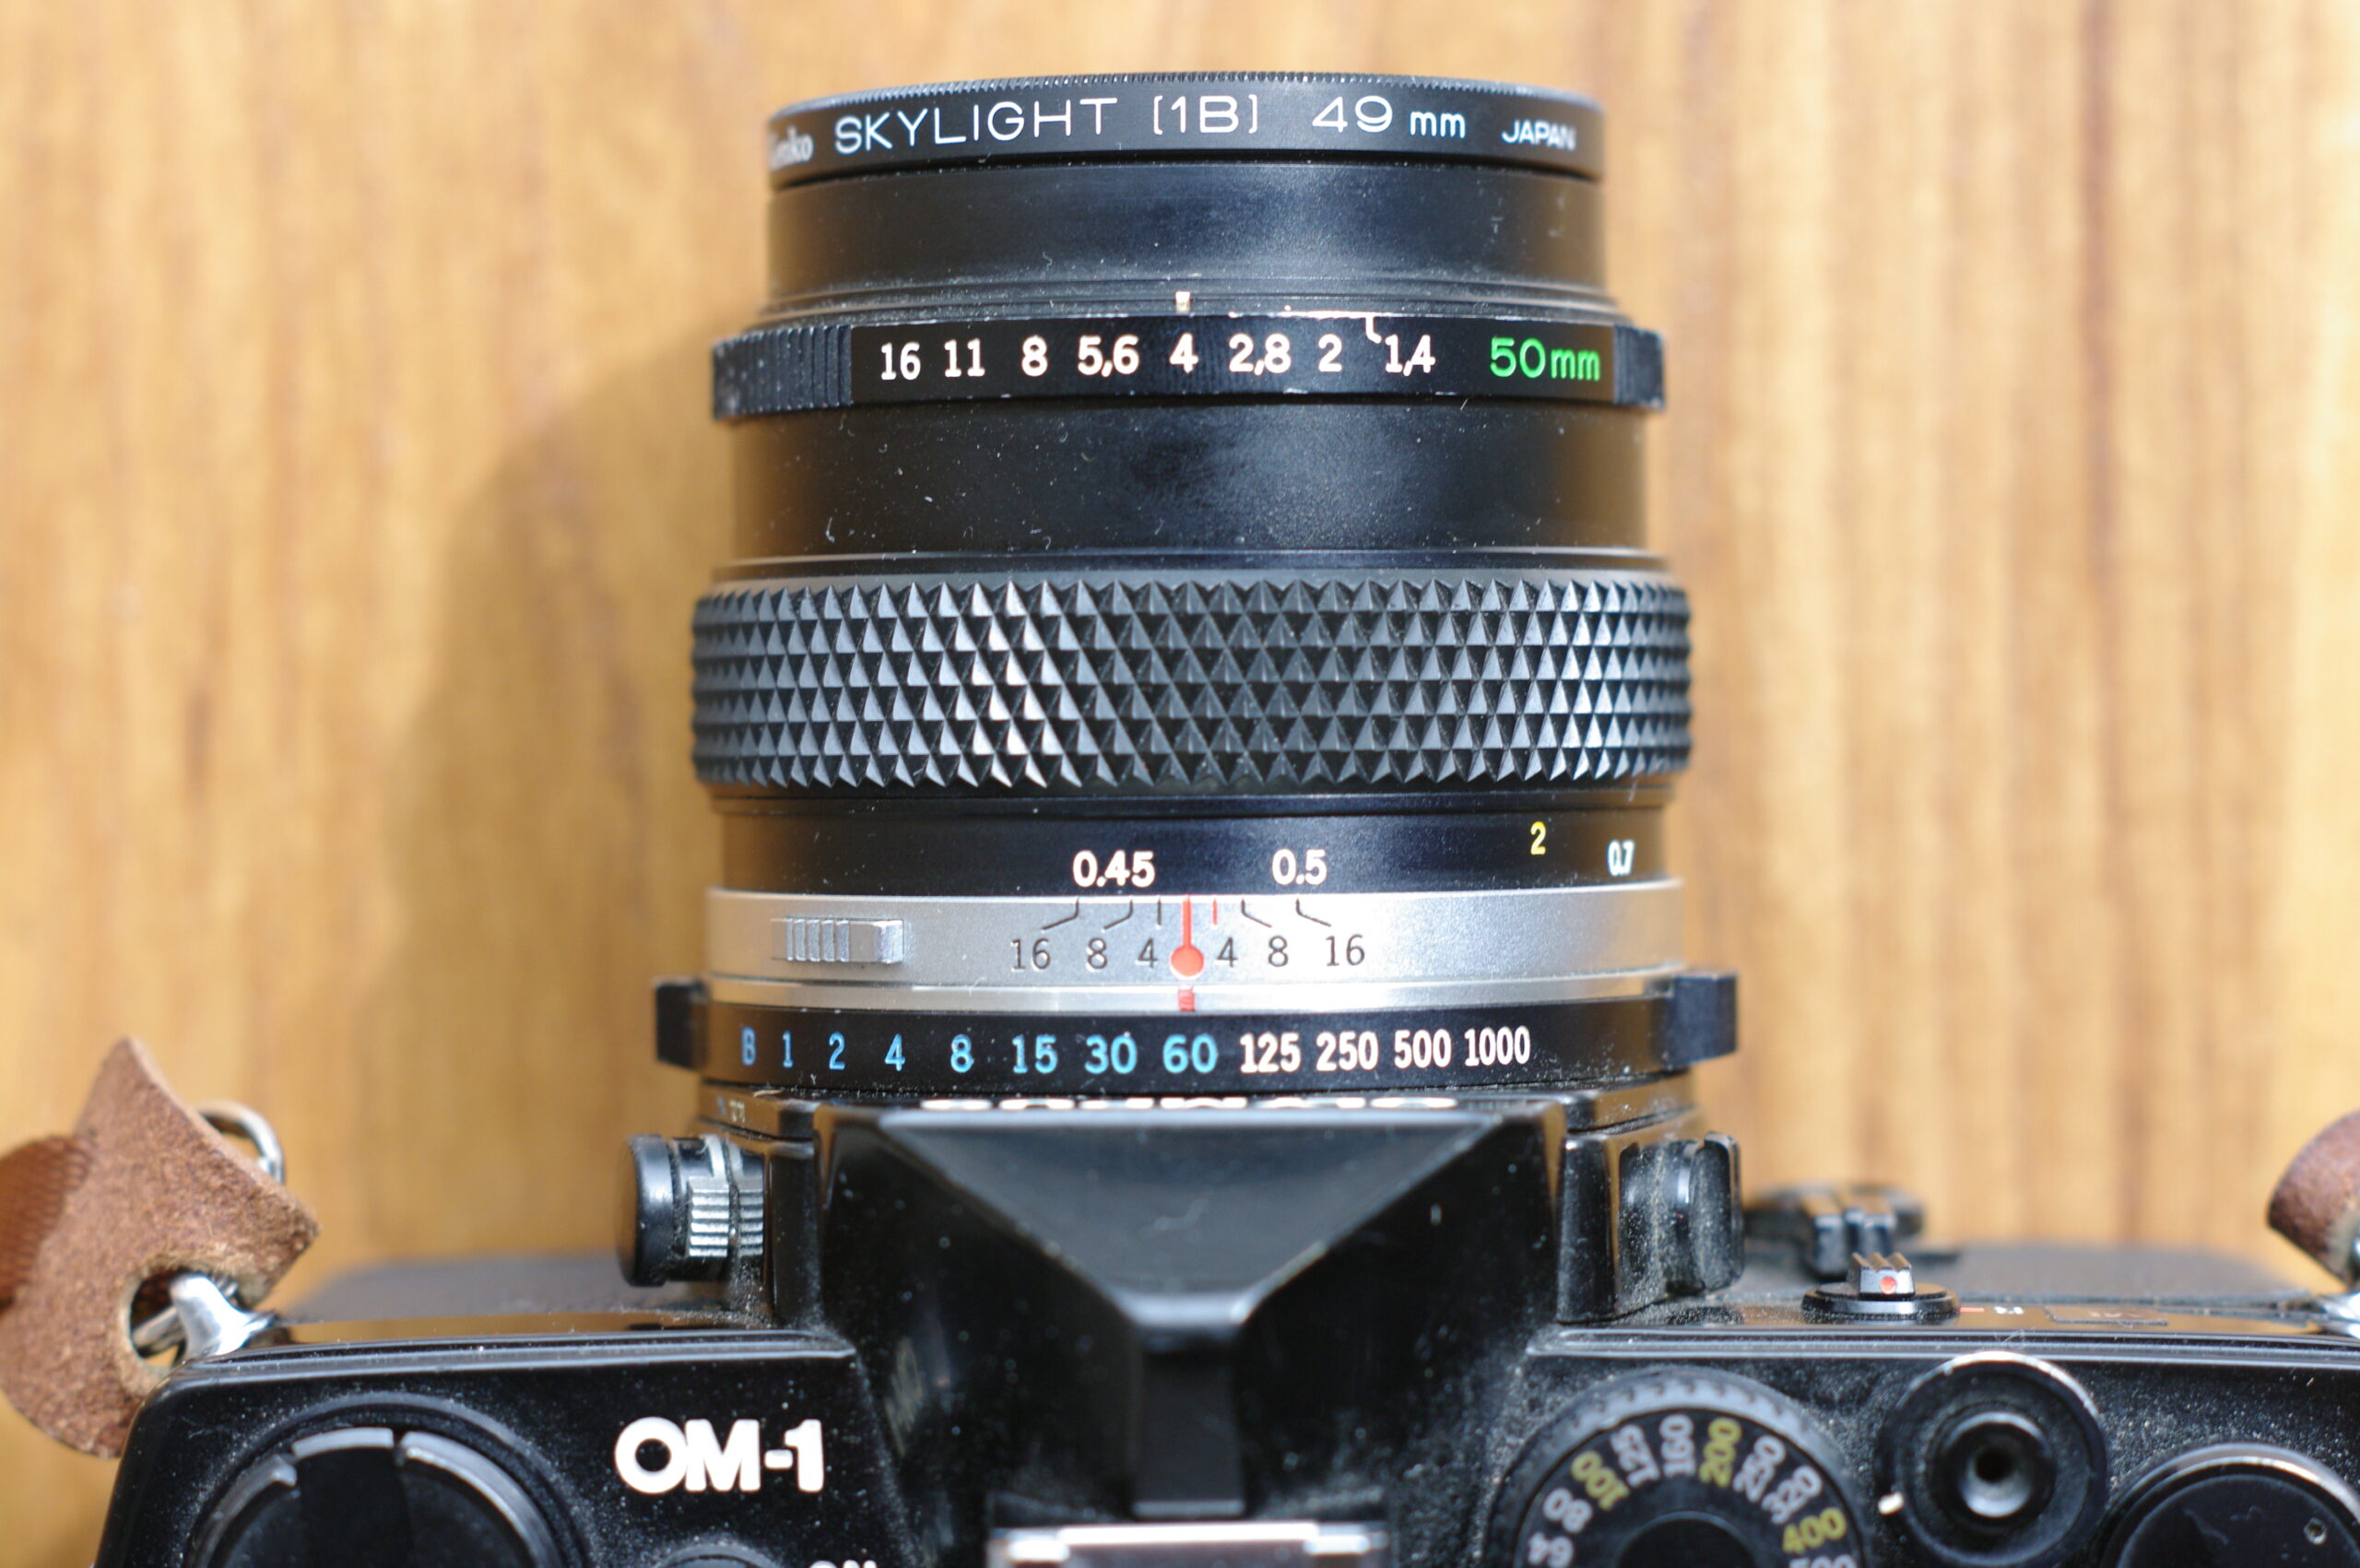 Olympus(オリンパス)のレンズ olympus om-system zuiko mc auto-s 50mm f1.4  で撮影した写真(画像)一覧と、実際に使ってみた感想 - epilog.